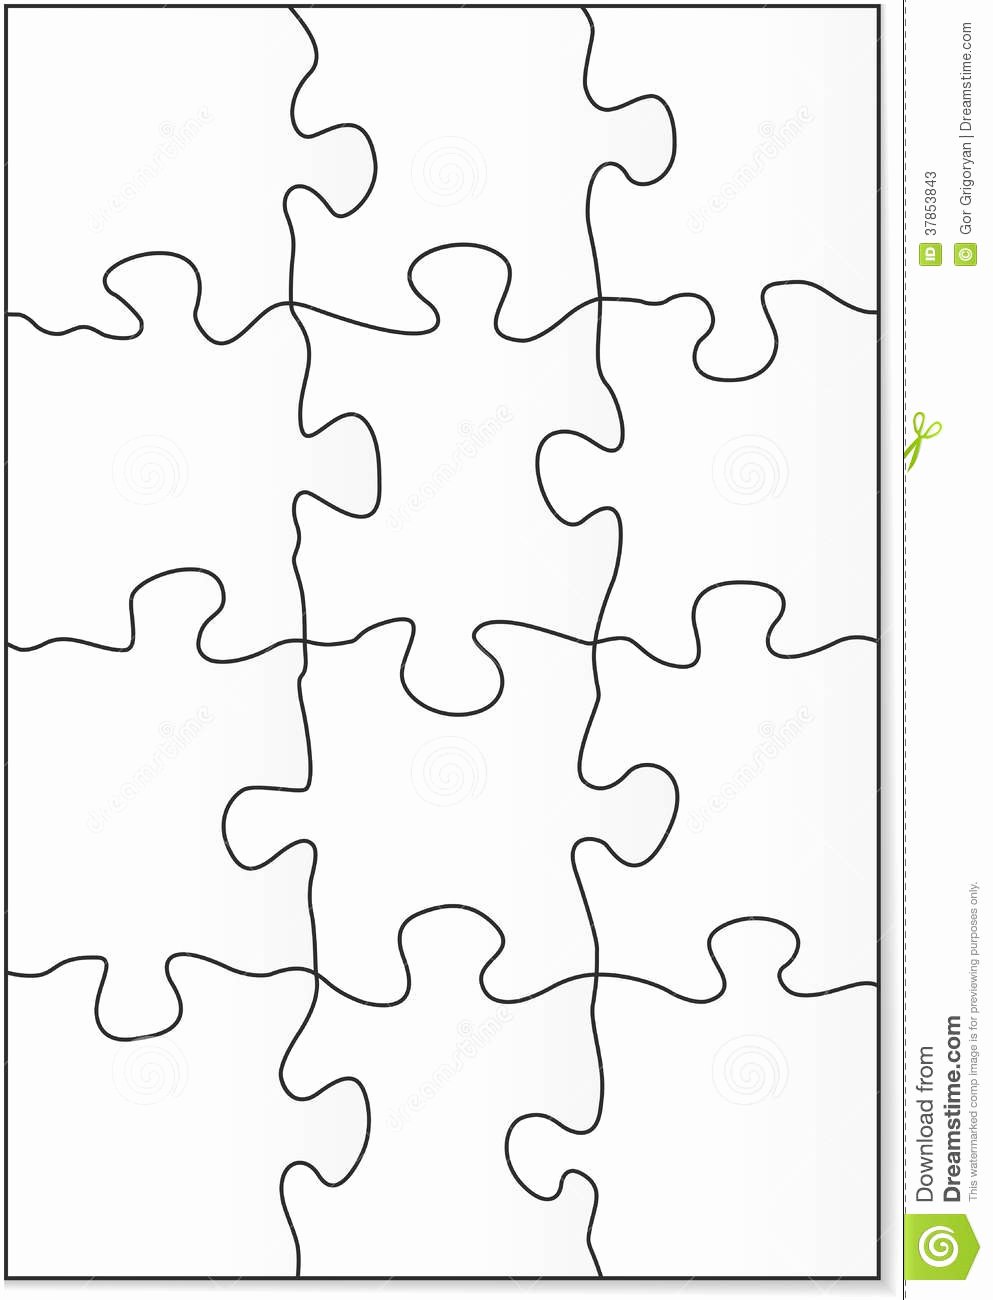 Best S Of 12 Piece Jigsaw Puzzle Template 12 Piece